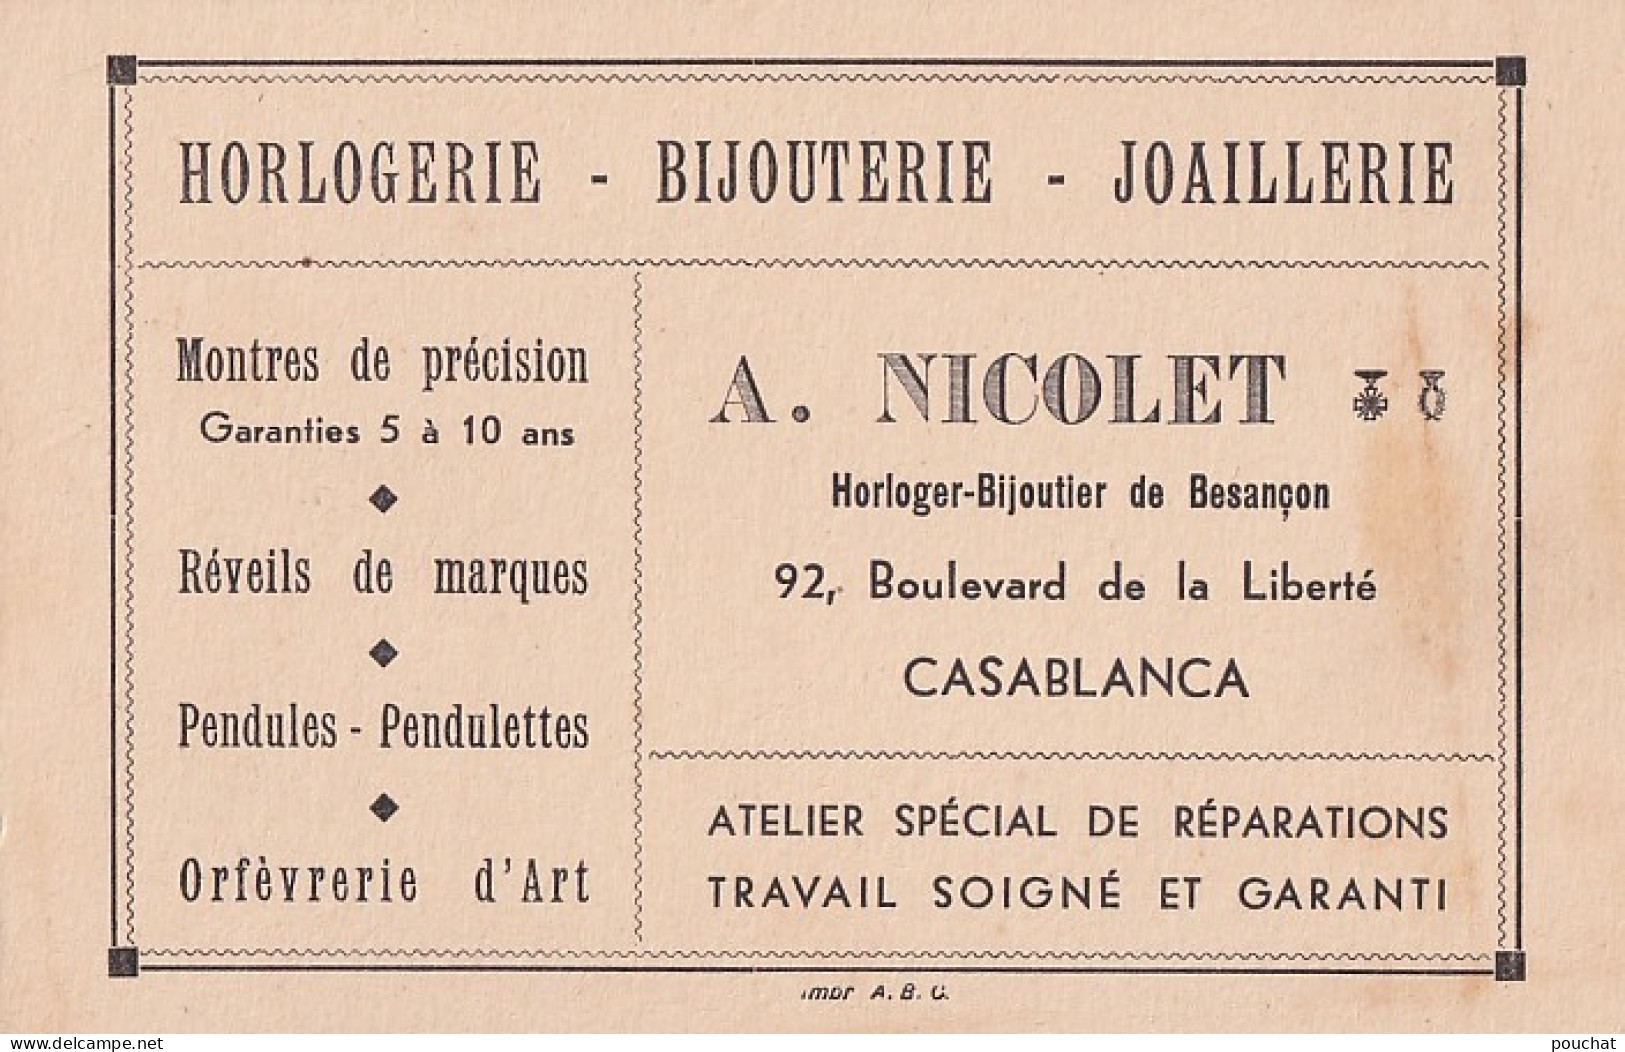   CASABLANCA - A. NICOLET - HORLOGERIE - BIJOUTERIE - JOAILLERIE - 92 , BOULEVARD DE LA LIBERTE - Cartoncini Da Visita